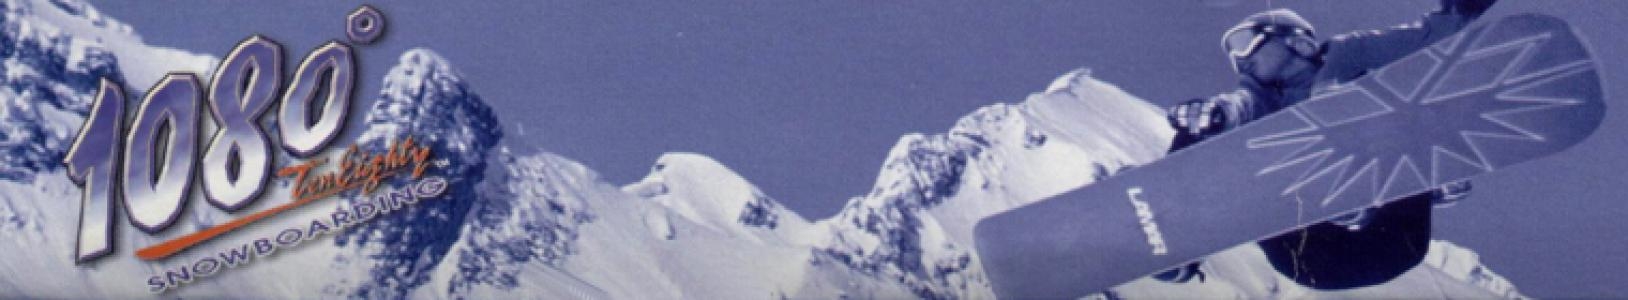 1080° Snowboarding banner